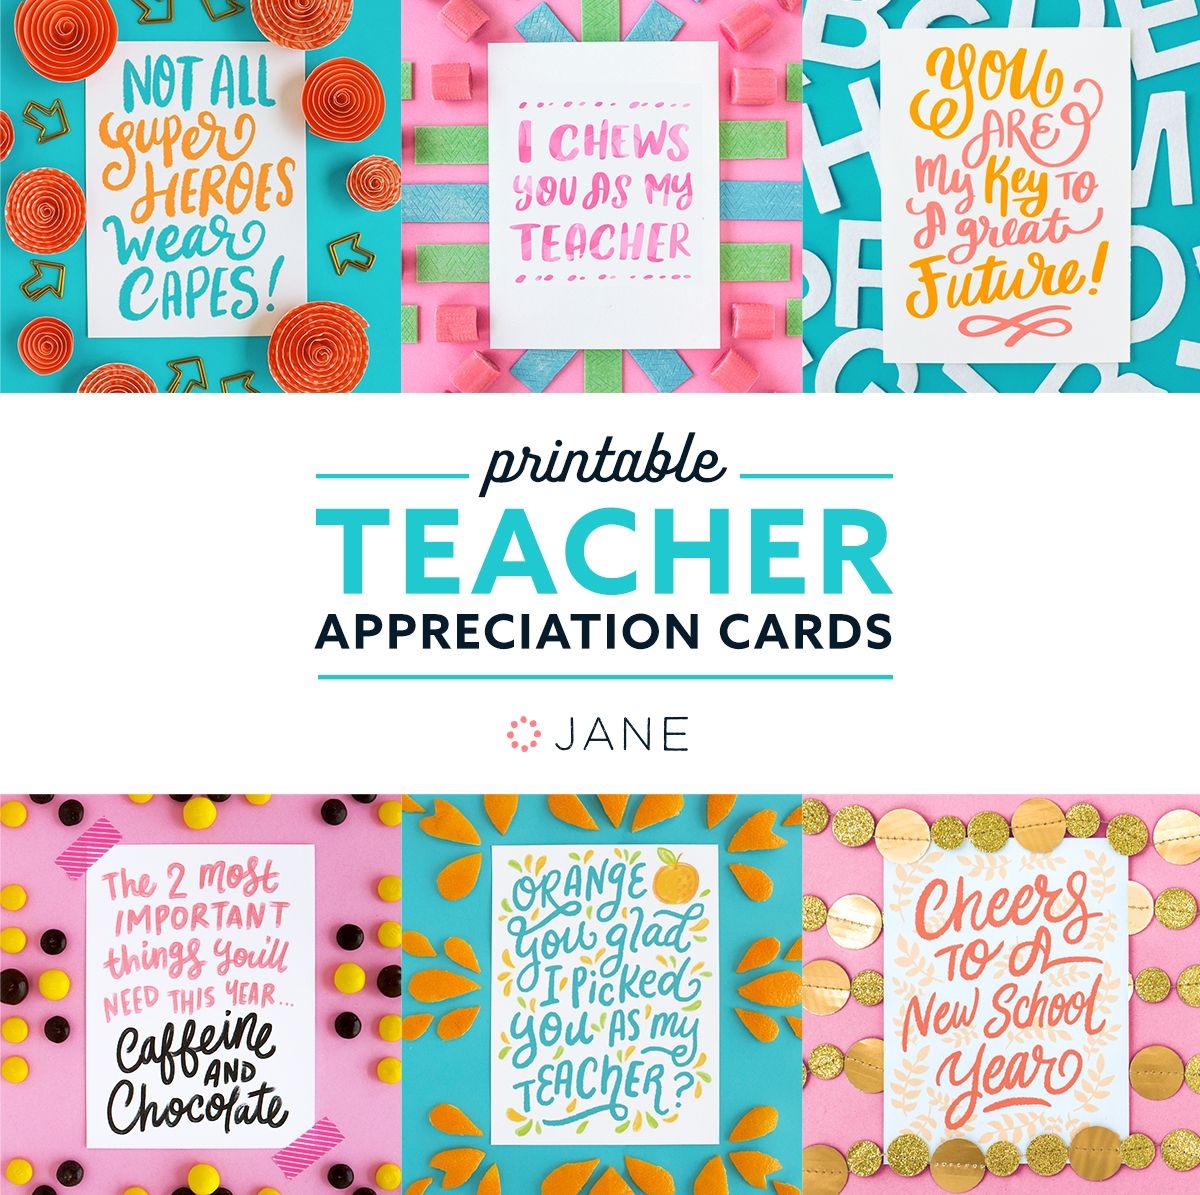 Jane Free Teacher Appreciation Printable Cards | Teacher - Free Printable Teacher Appreciation Cards